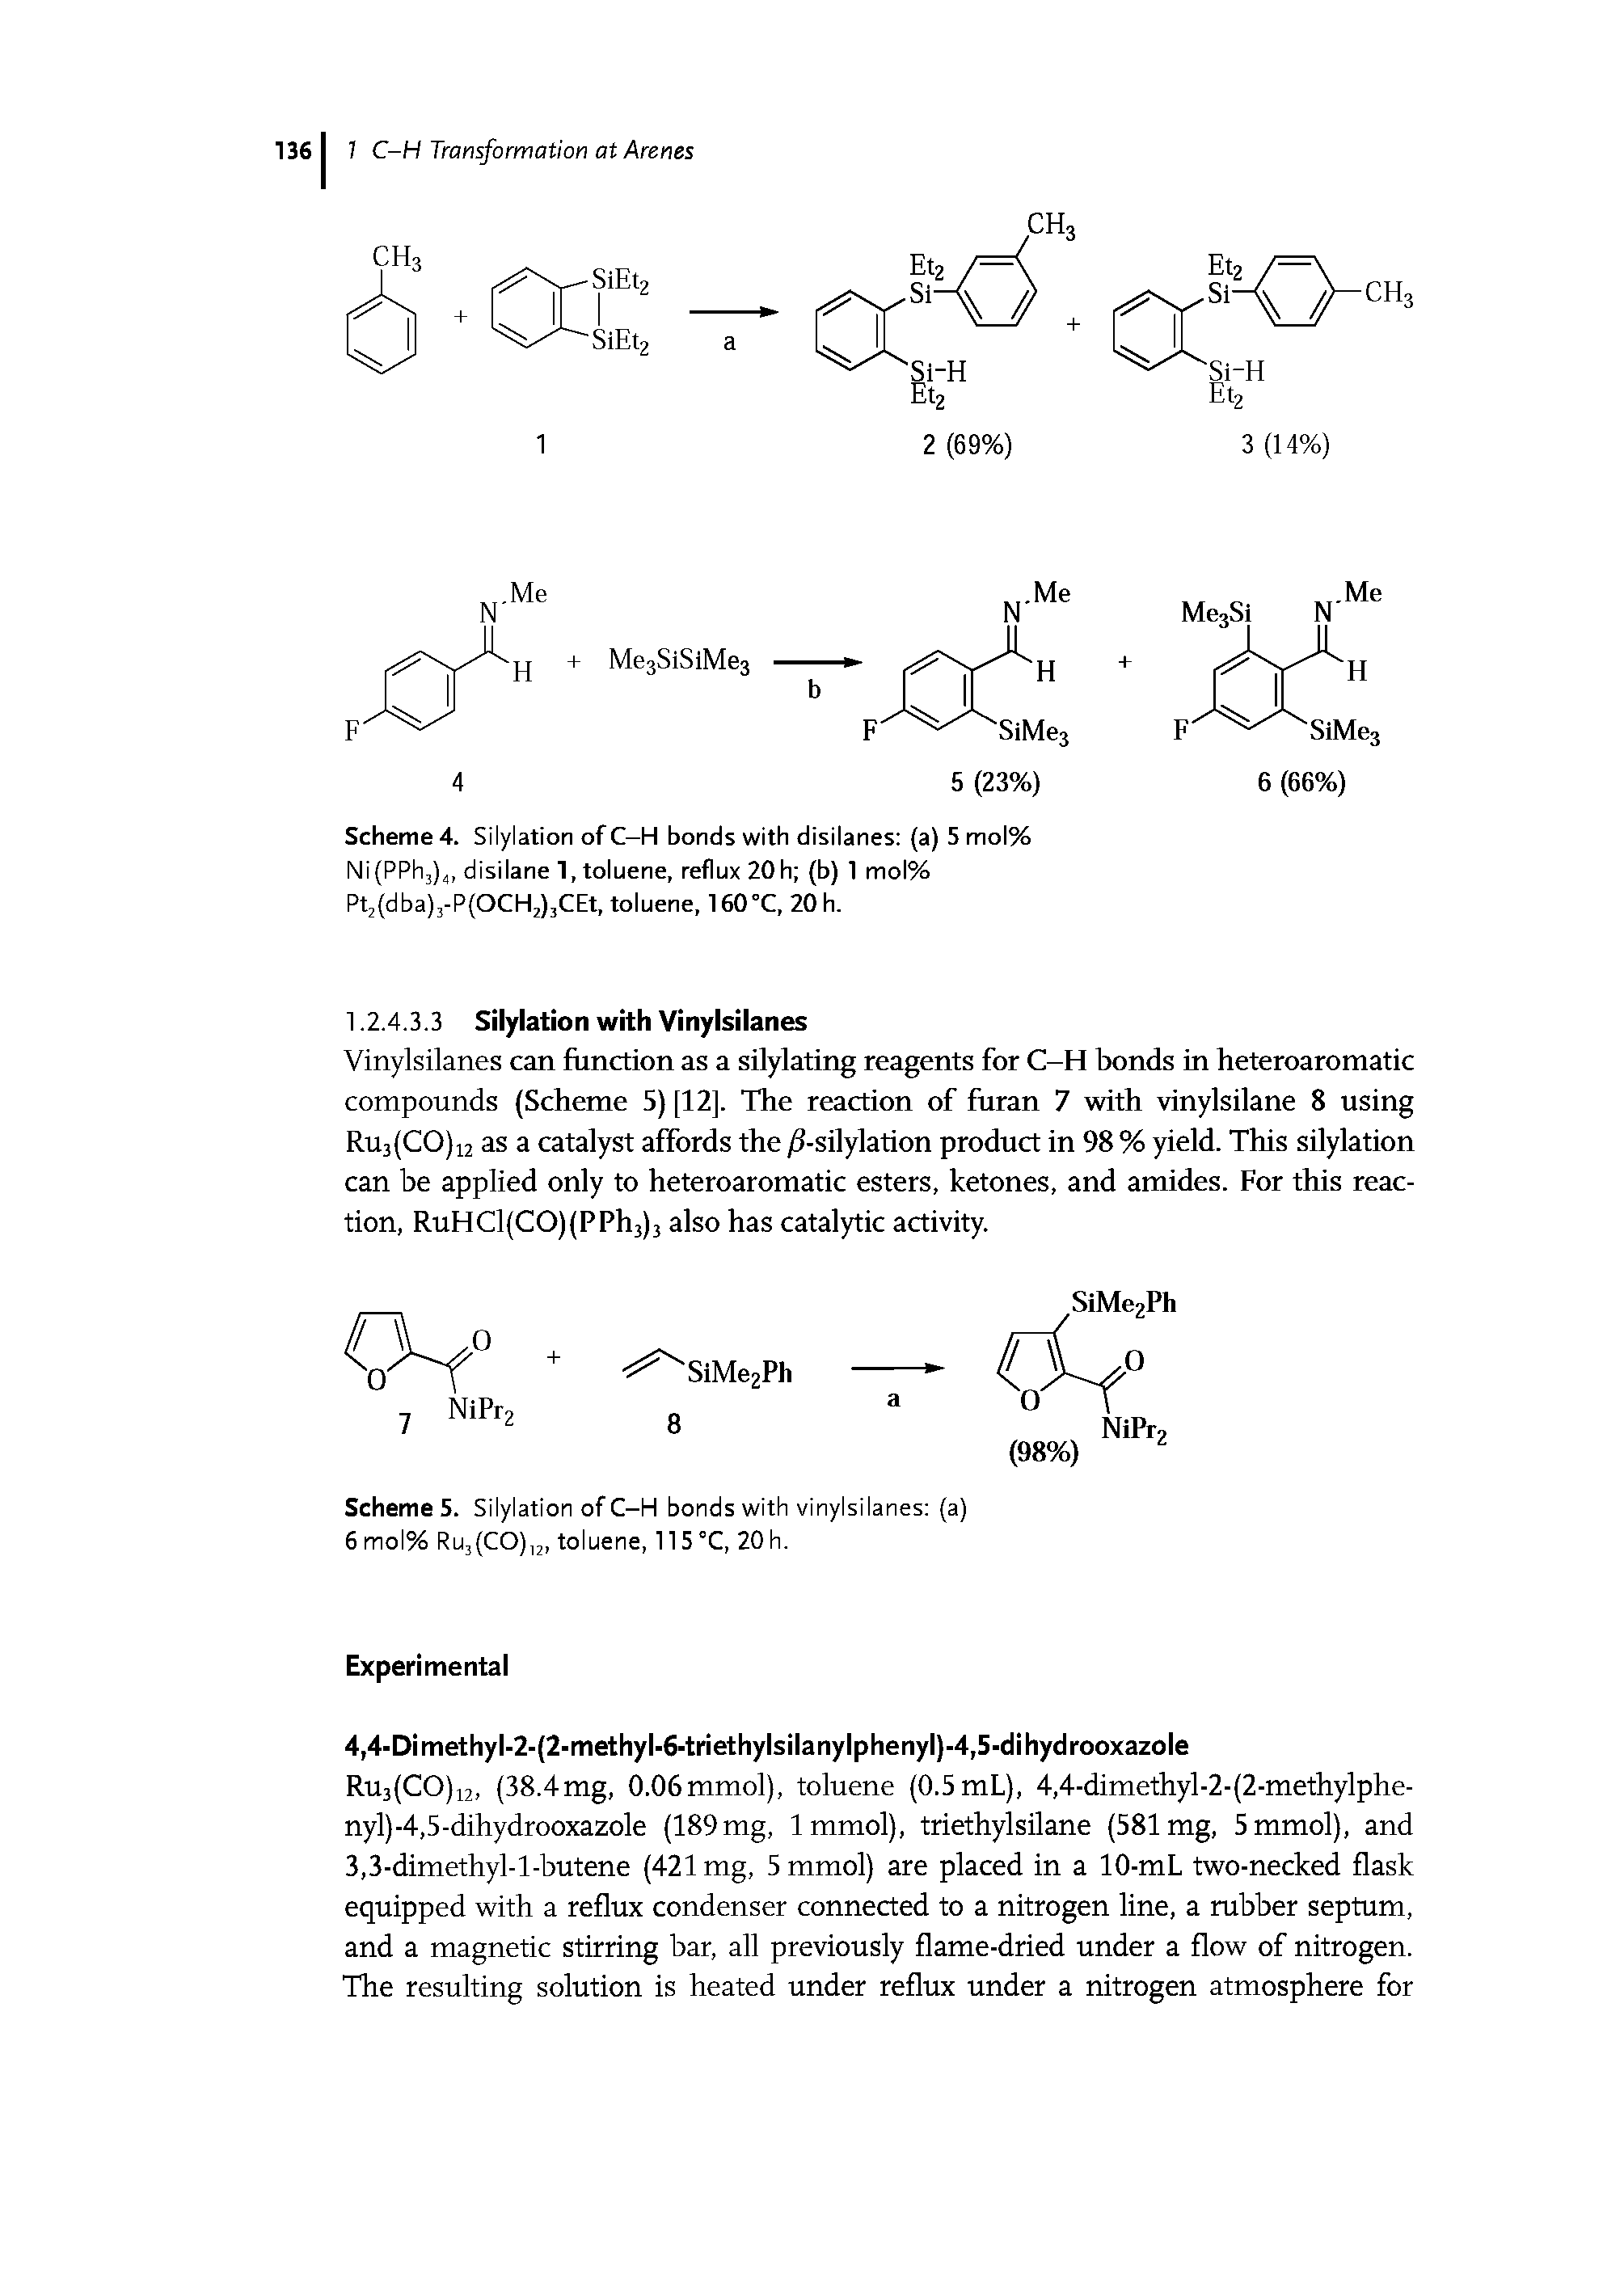 Scheme 4. Silylation of C—H bonds with disilanes (a) 5 mol% Ni(PPh3)4, disilane 1, toluene, reflux 20h (b) 1 mol% Pt2(dba)3-P(OCH2)3CEt, toluene, 160°C, 20 h.